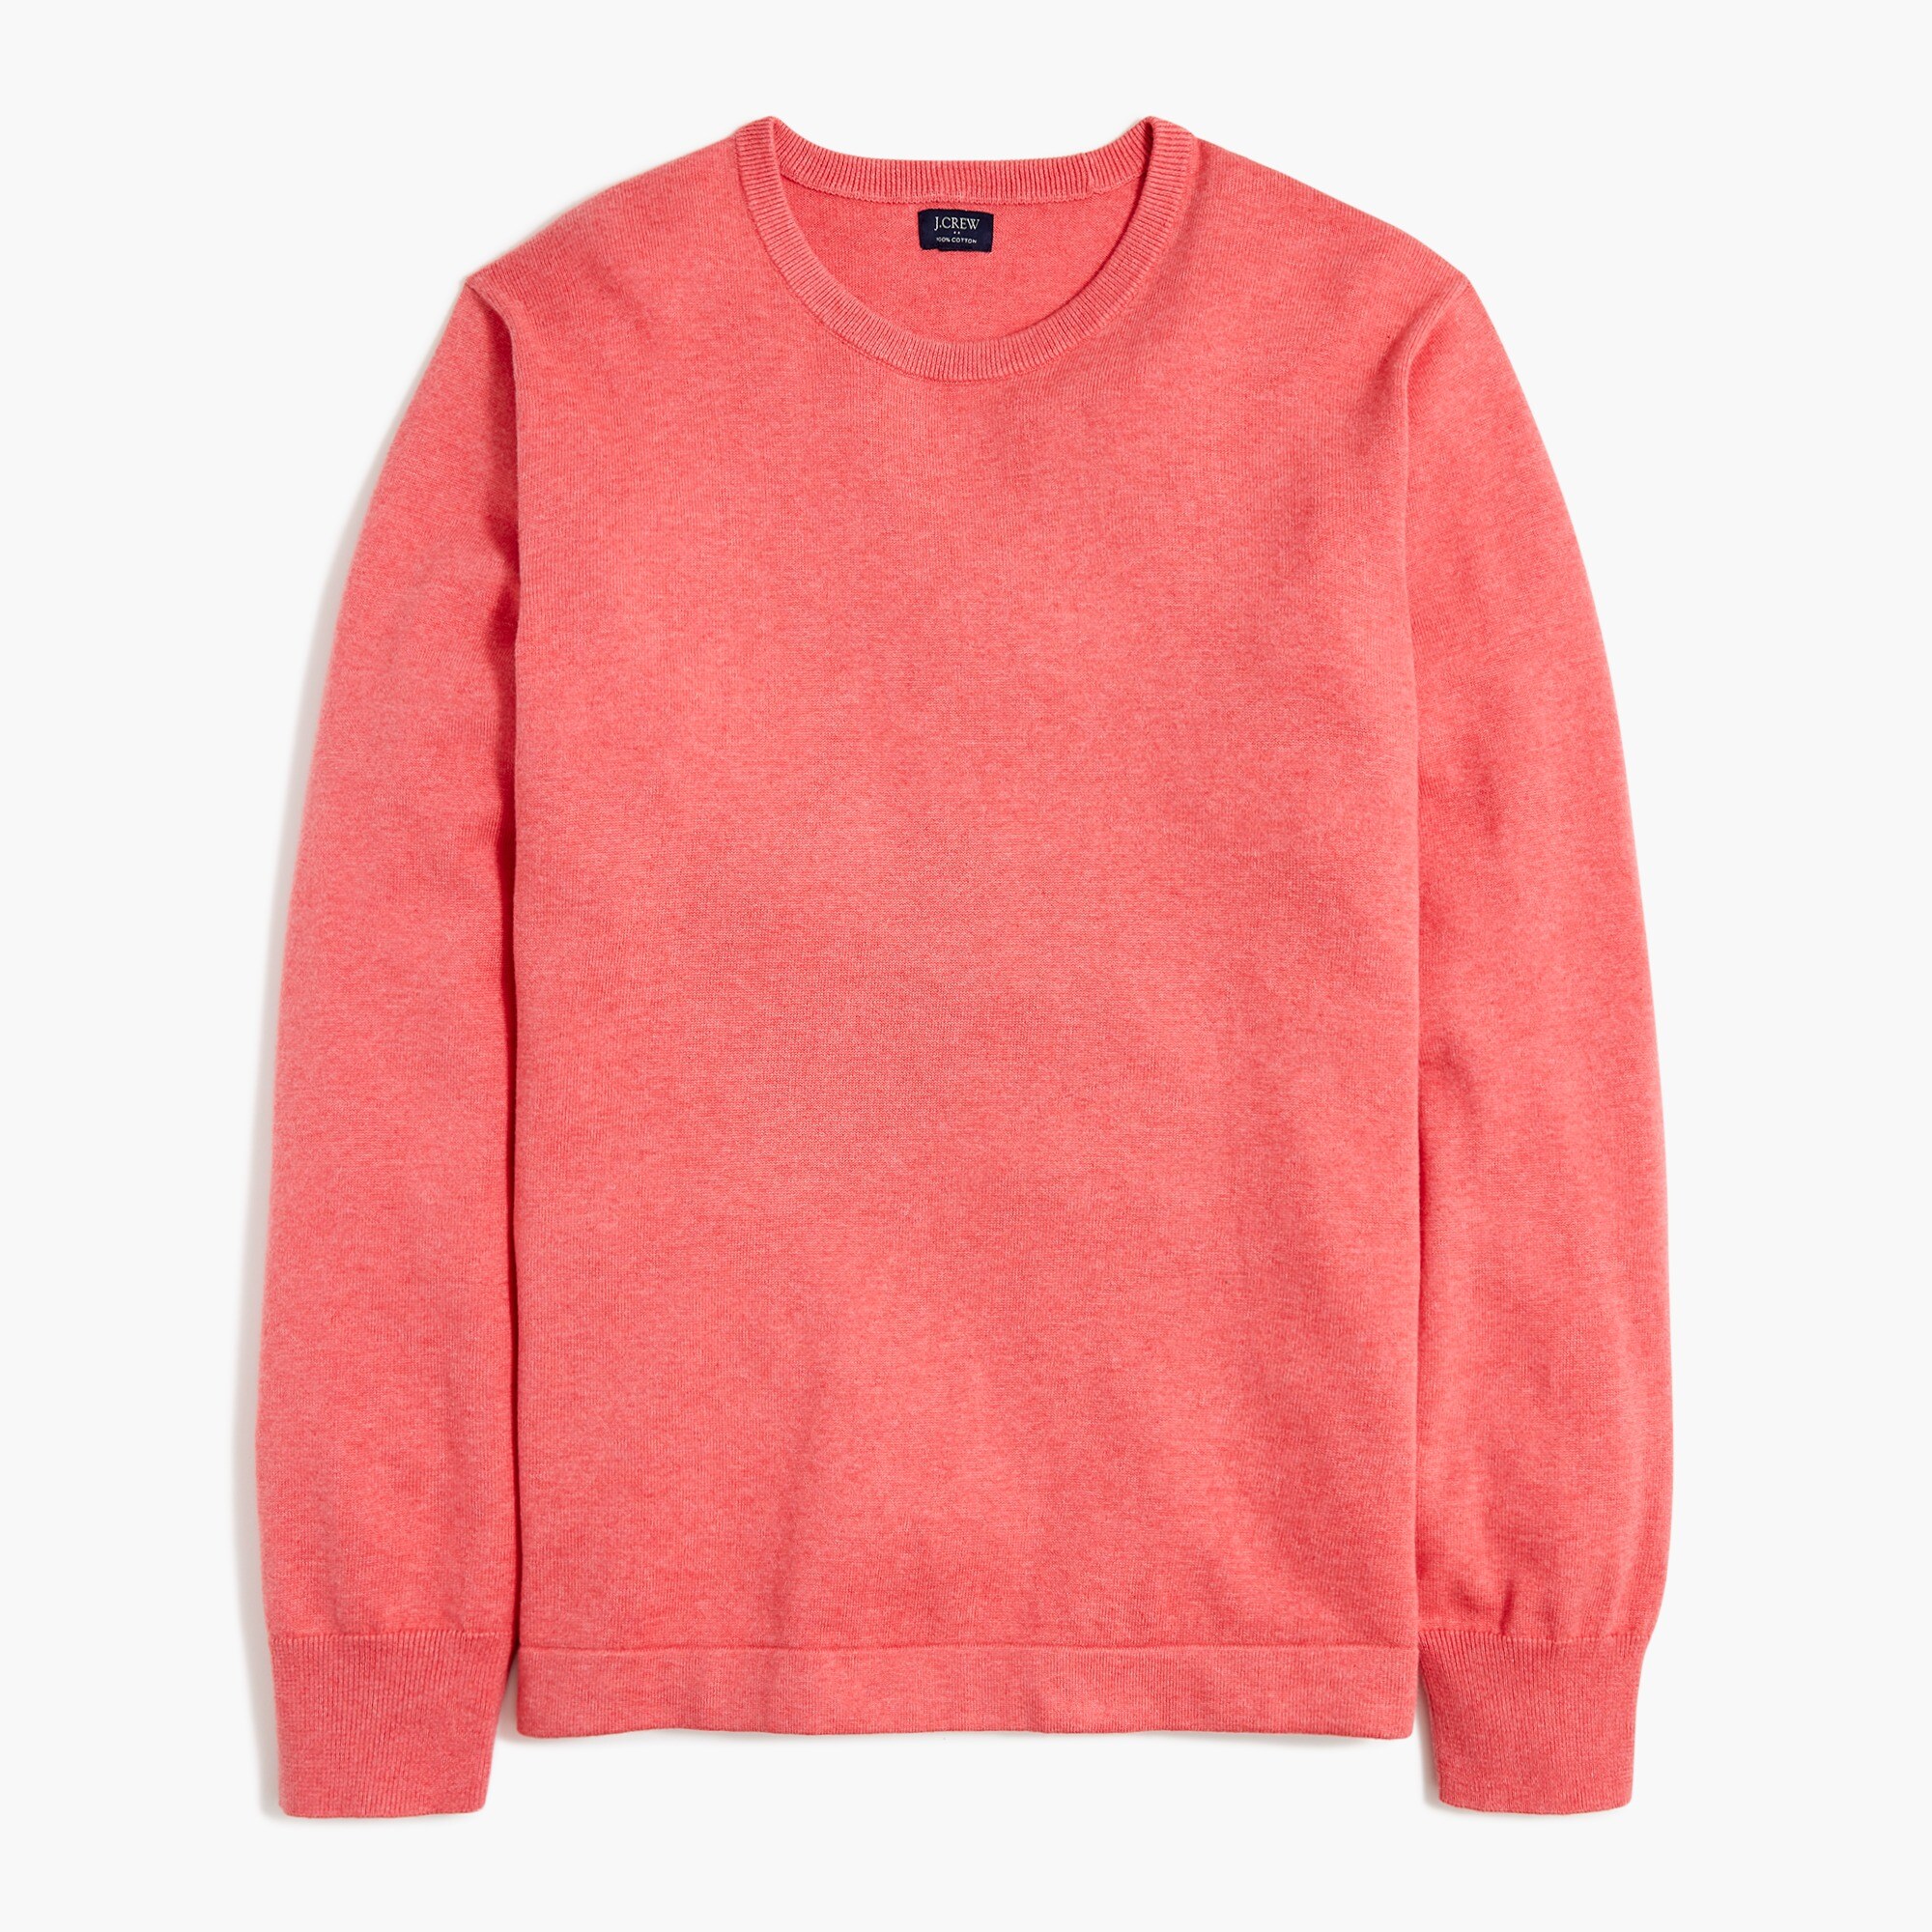  Cotton crewneck sweater-tee